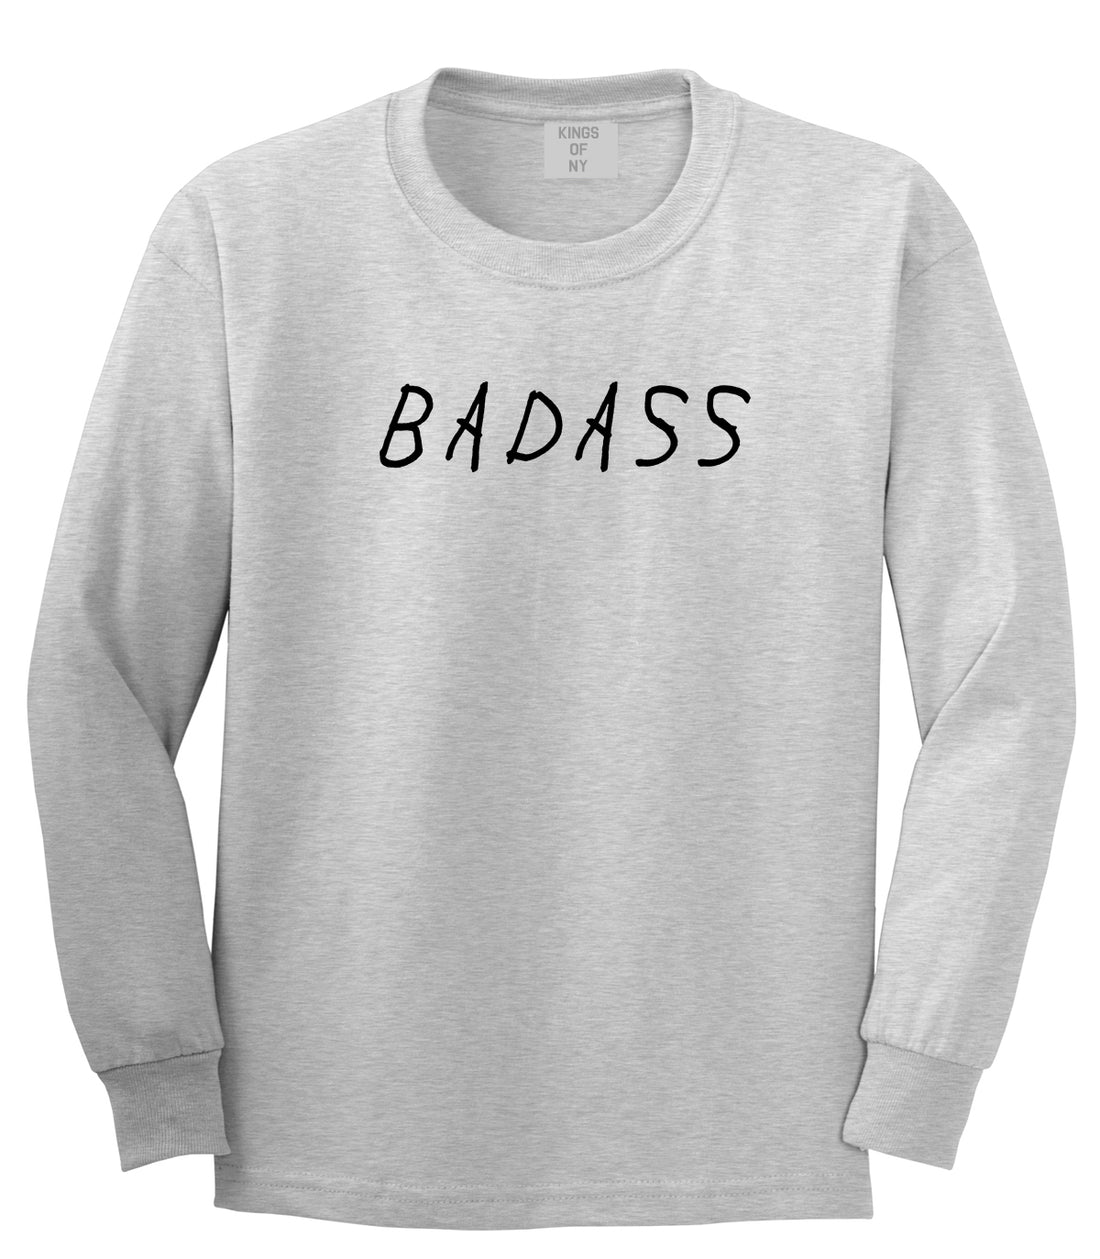 Badass Grey Long Sleeve T-Shirt by Kings Of NY